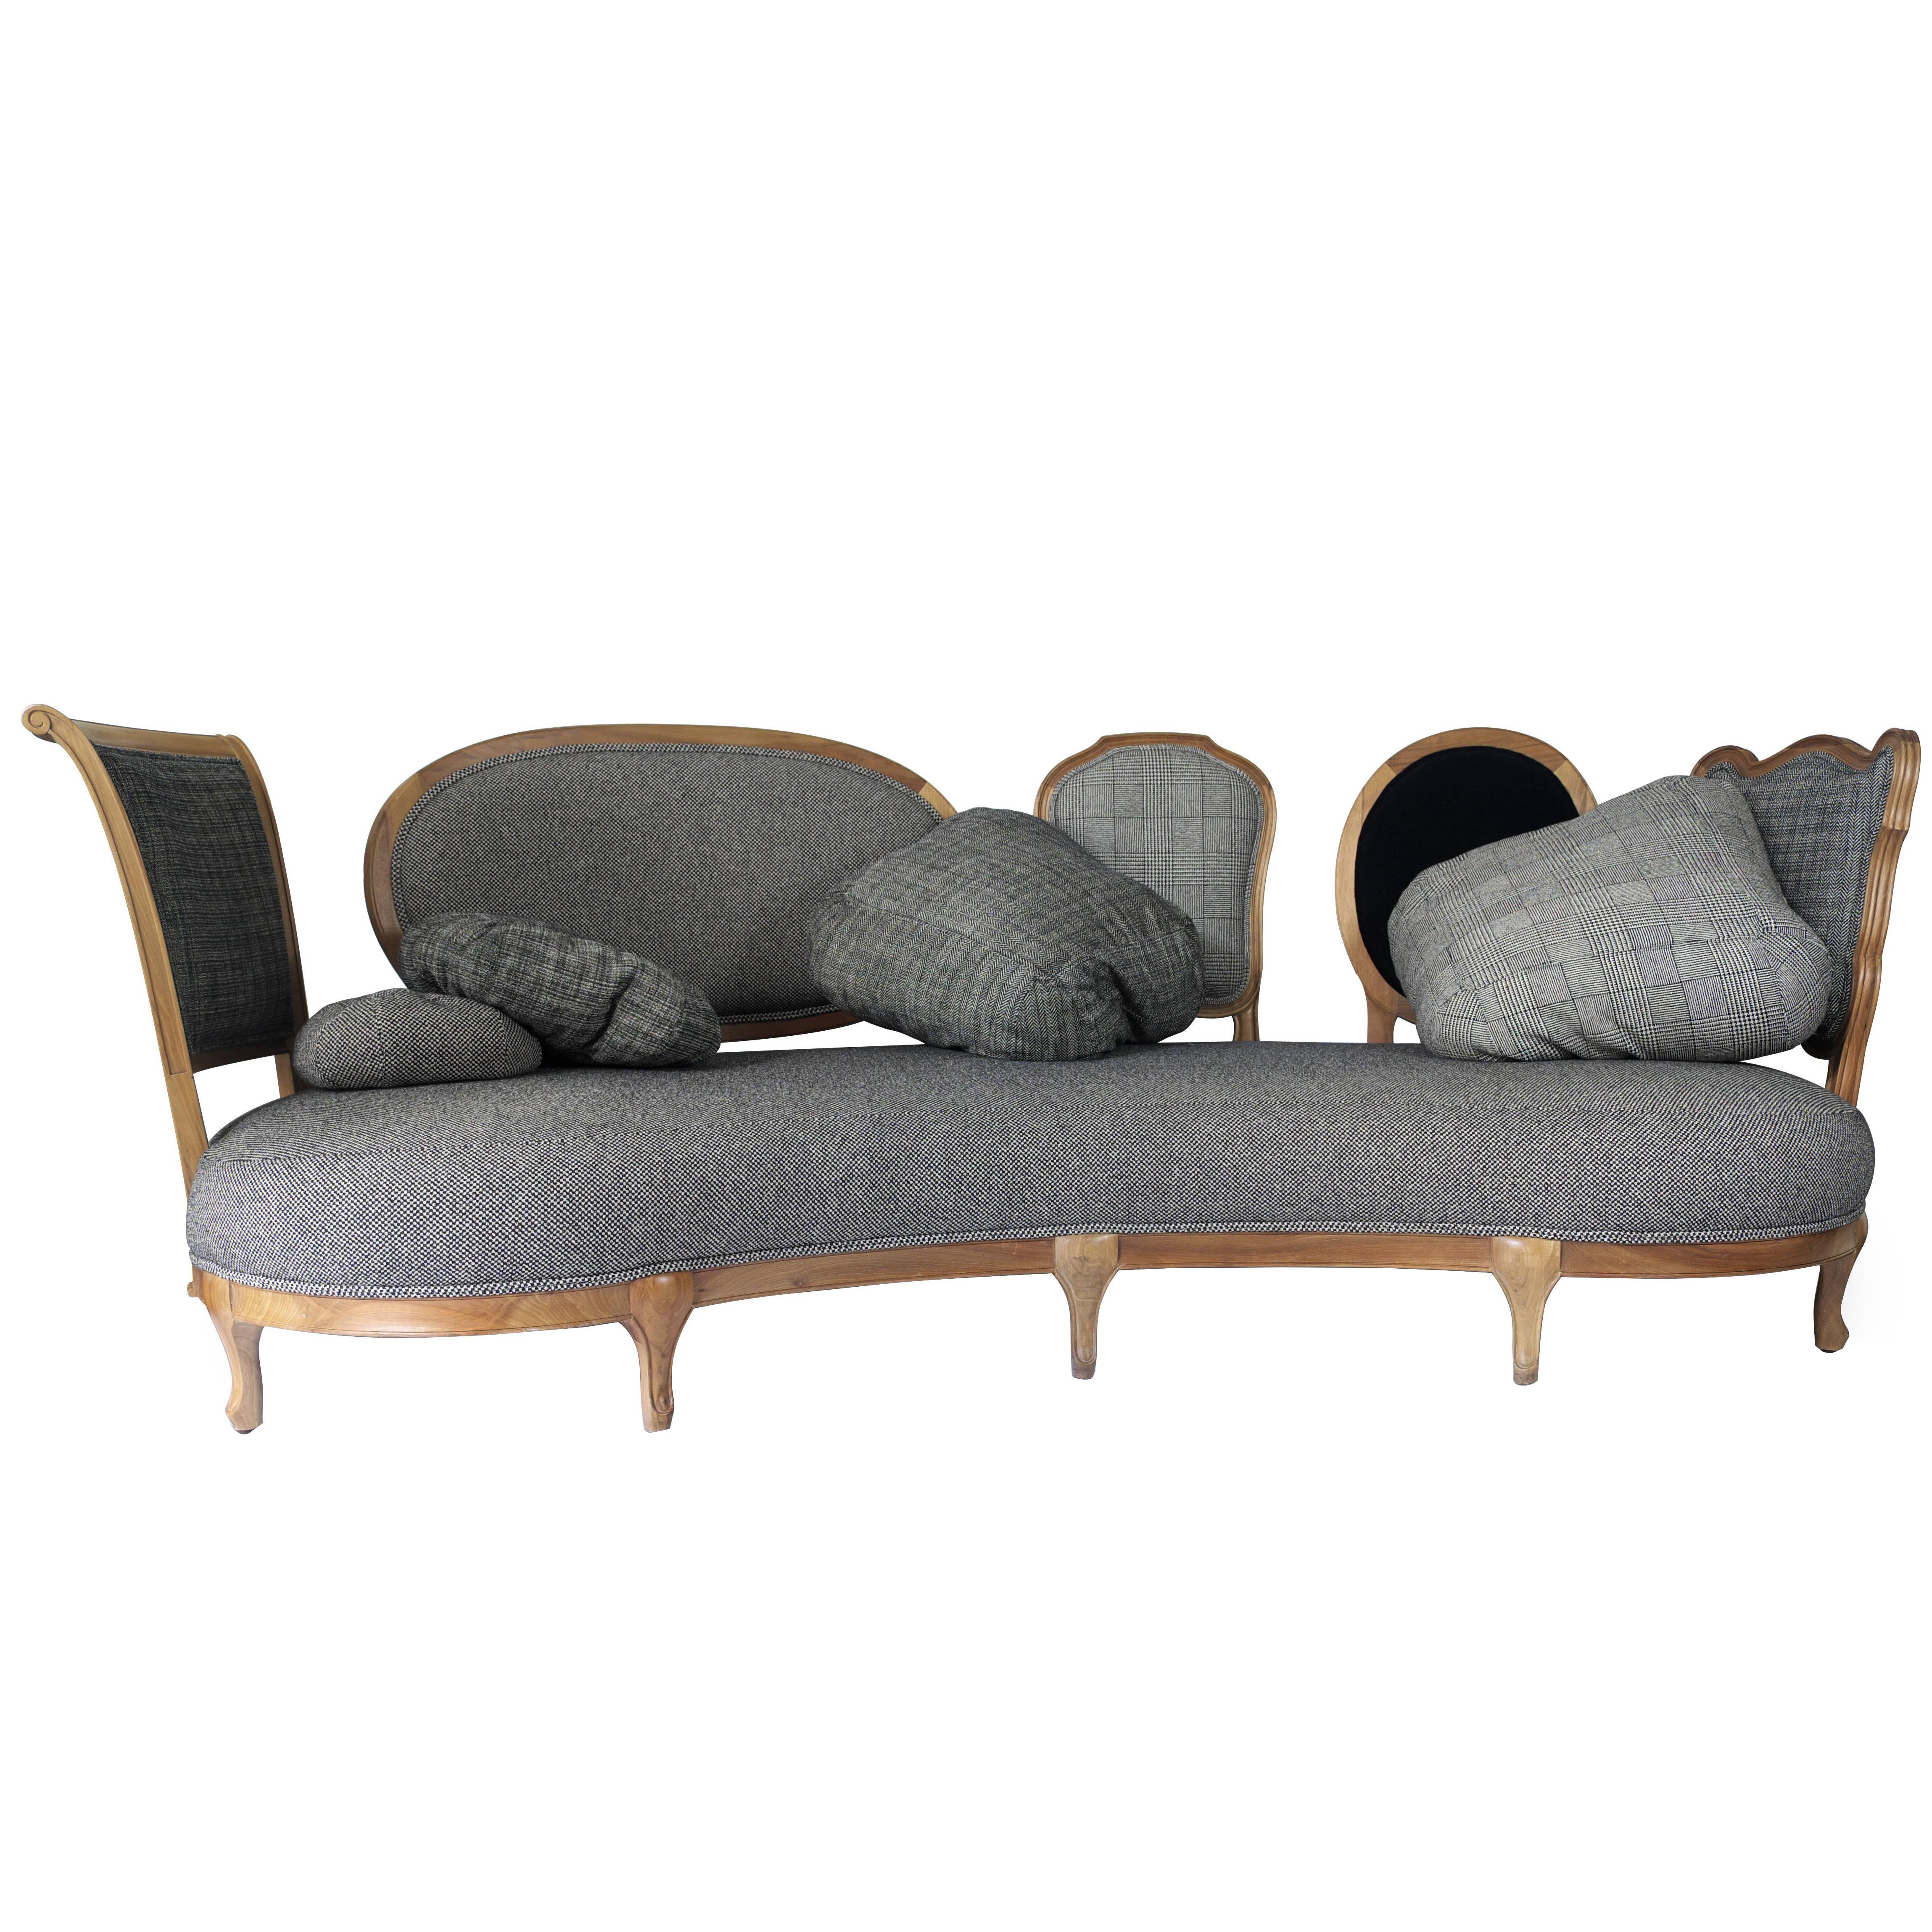 Back to Back - modern walnut sofa, designed by Nigel Coates